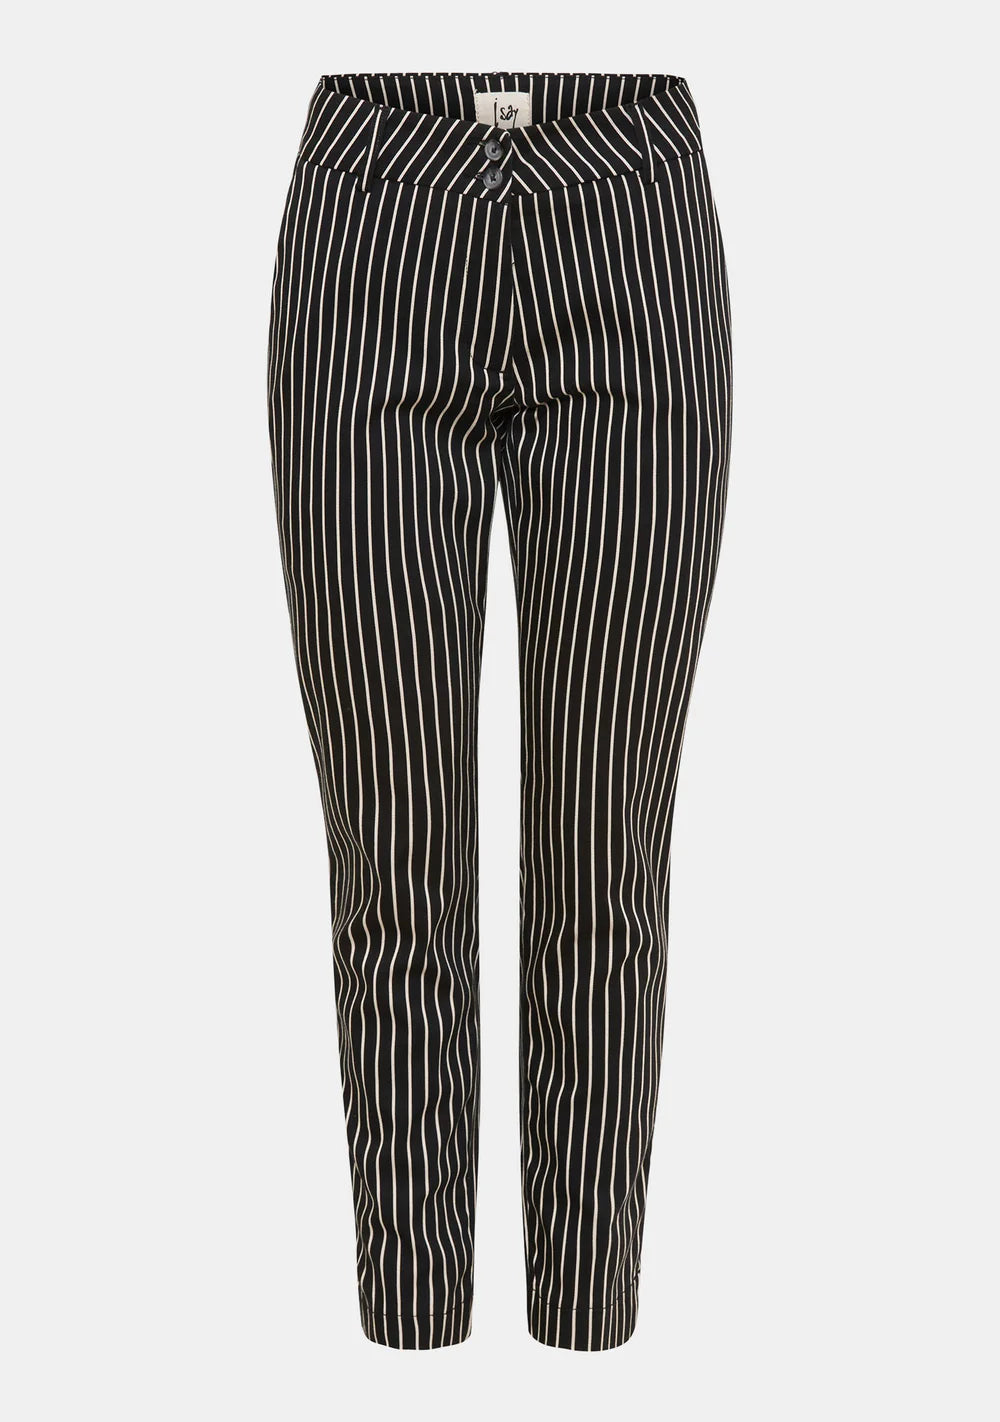 Chino printed pant, winter sand/black stripe